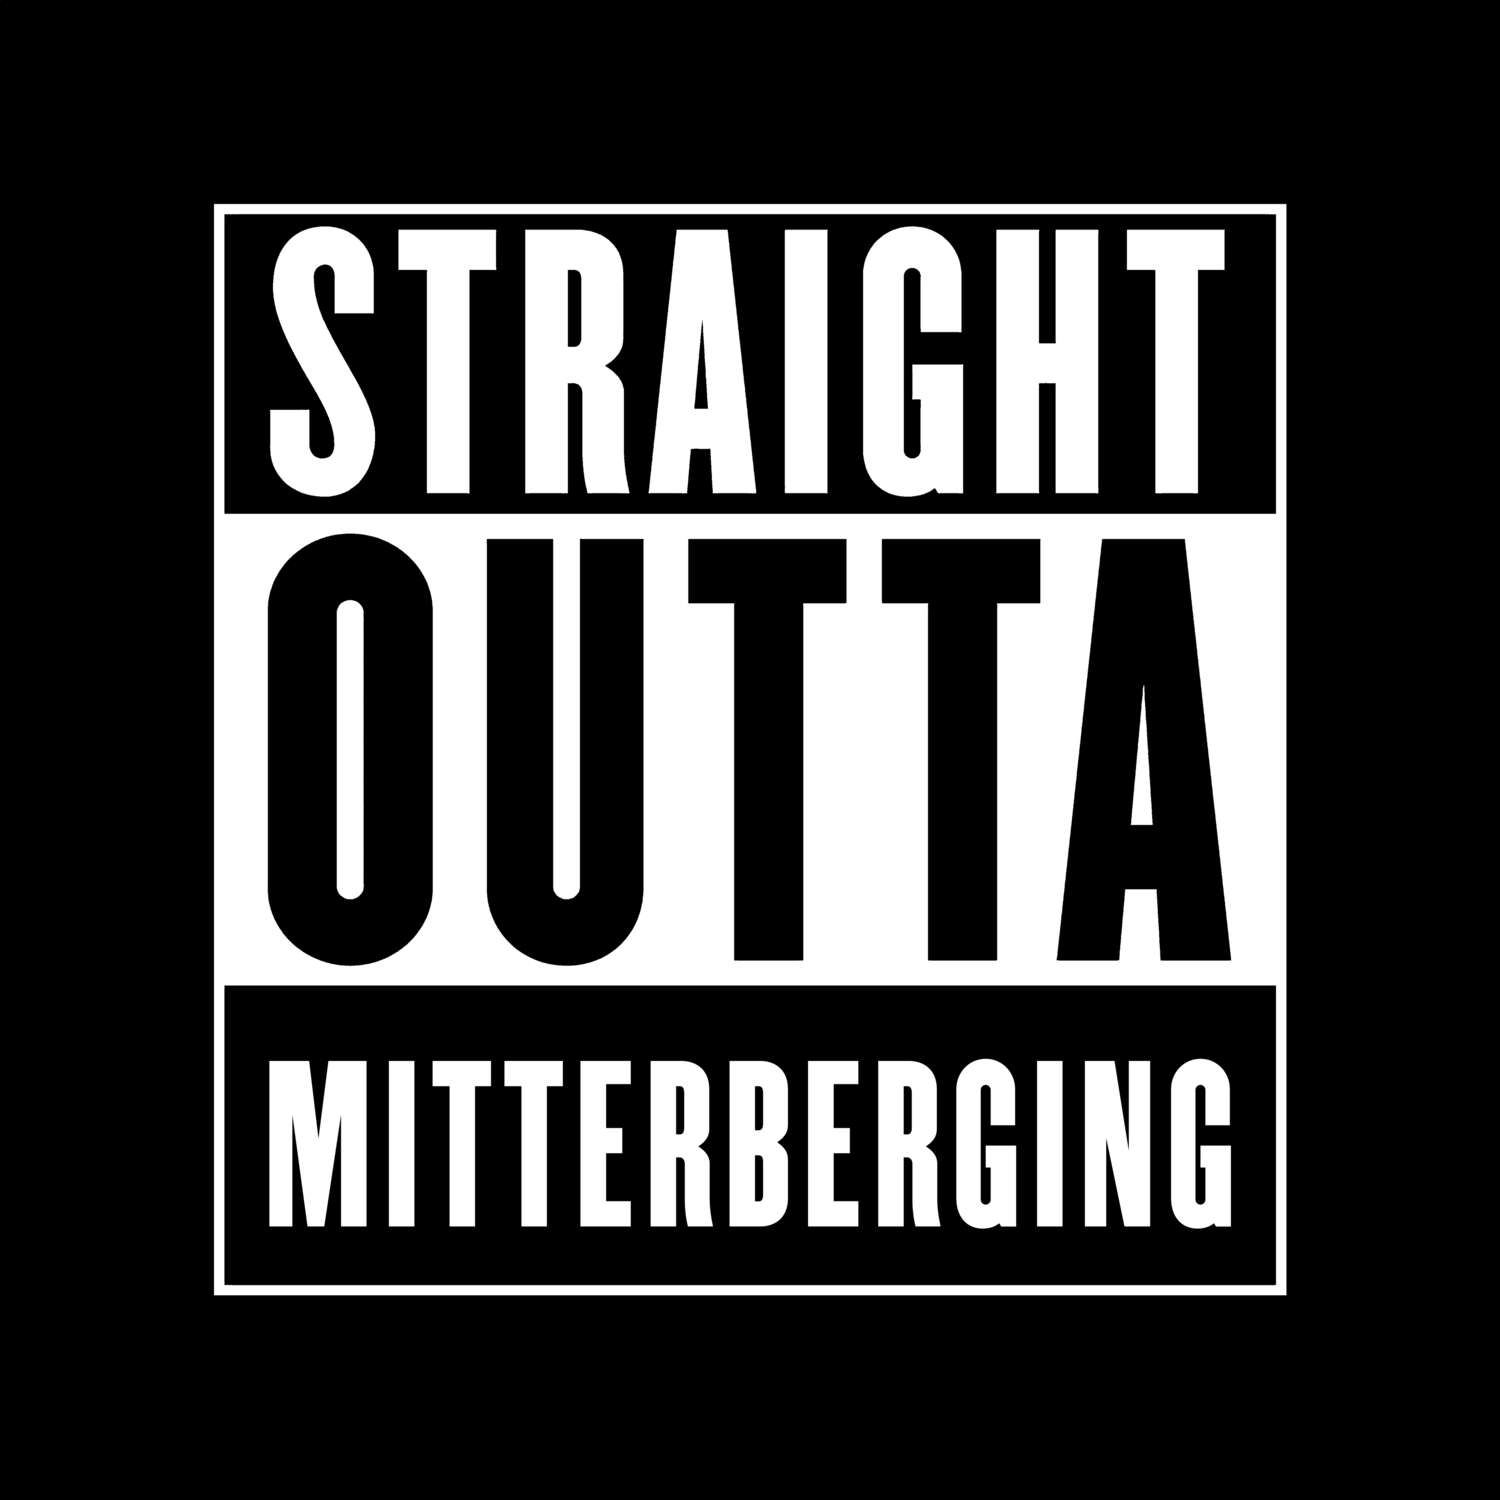 Mitterberging T-Shirt »Straight Outta«